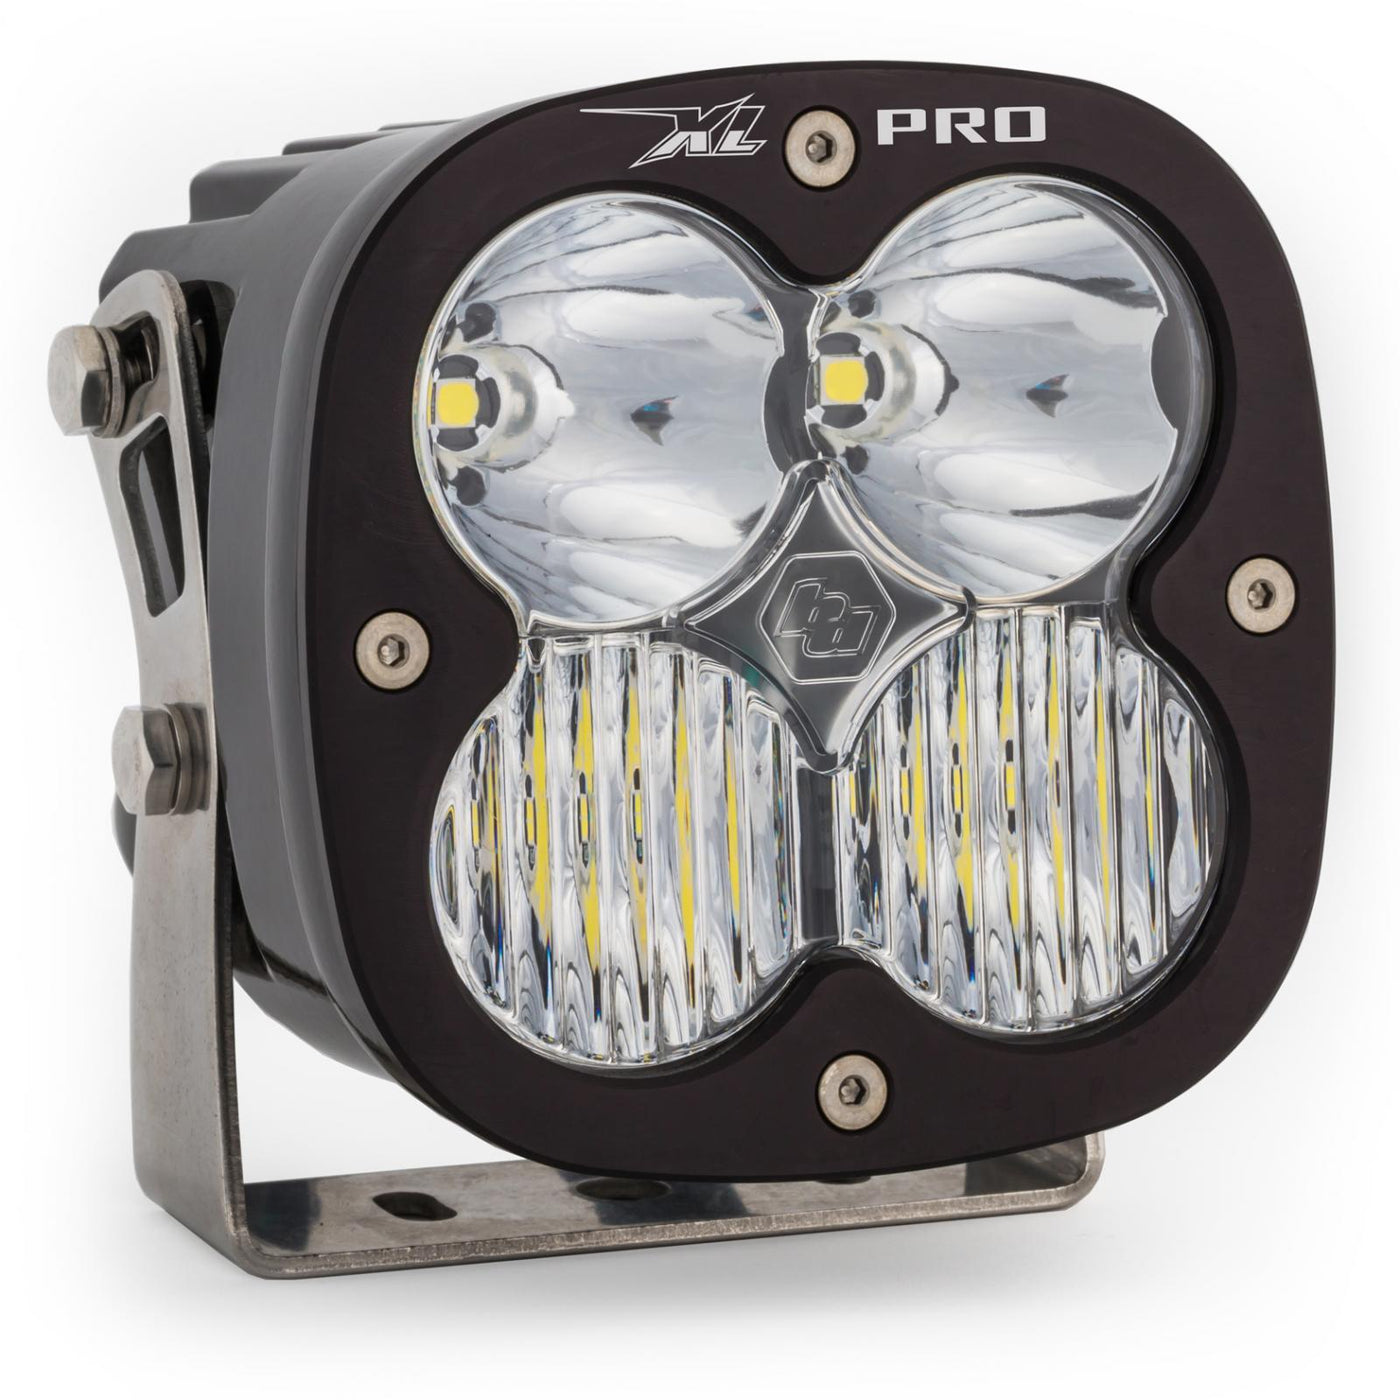 Baja Designs 500003 LED Light Pods Clear Lens Spot XL Pro DrivingCombo